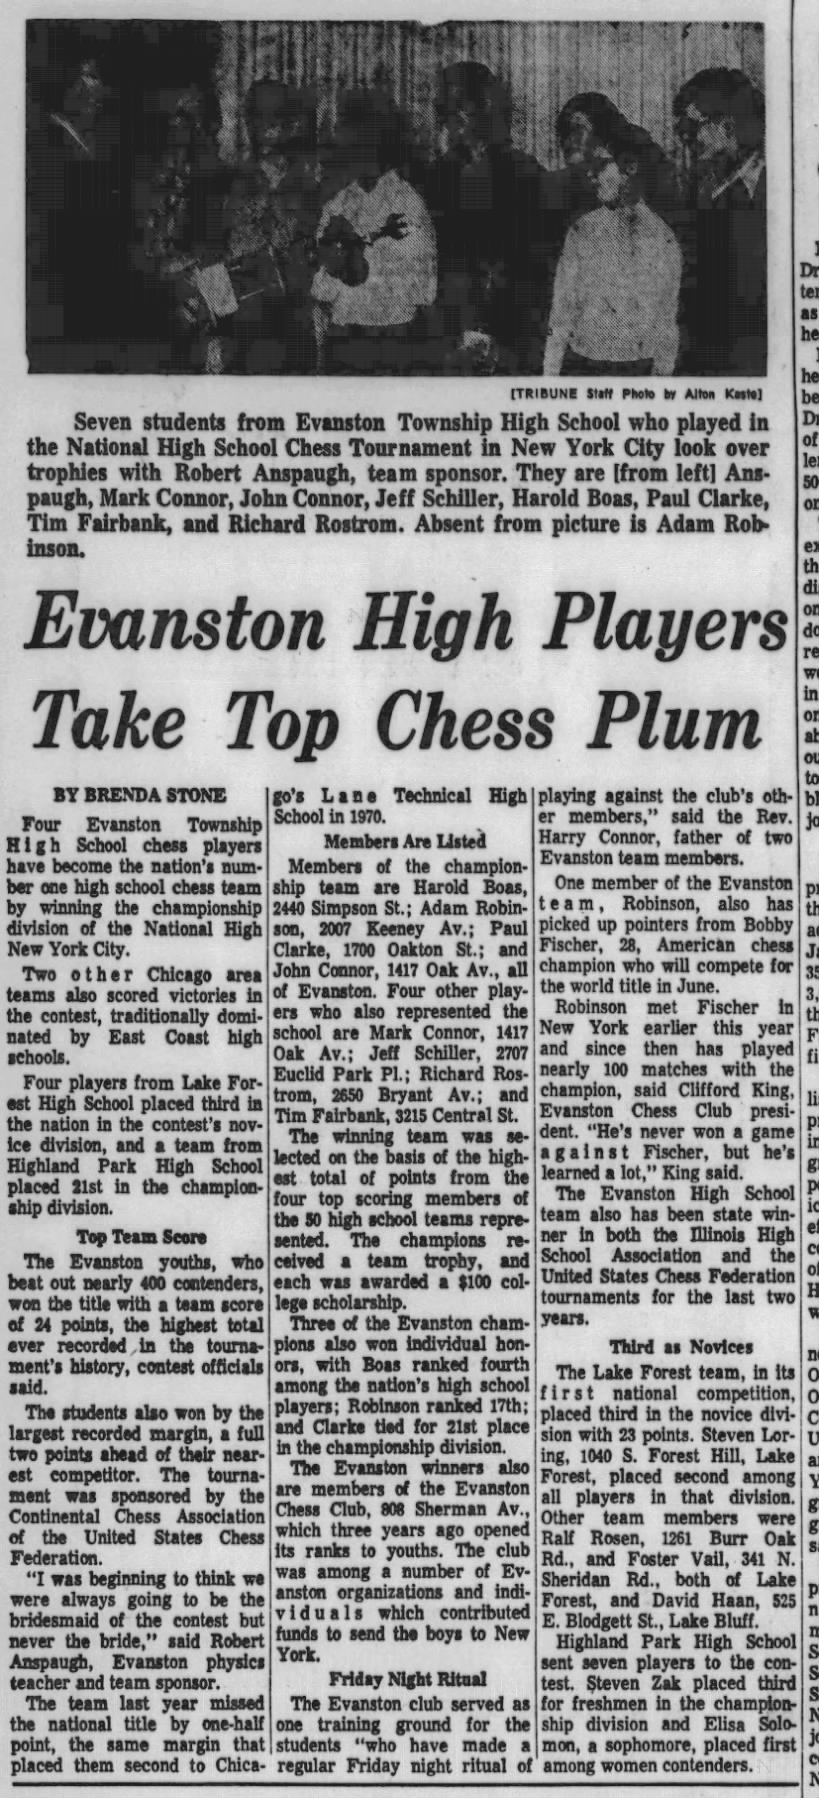 Evanston High Players Take Top Chess Plum